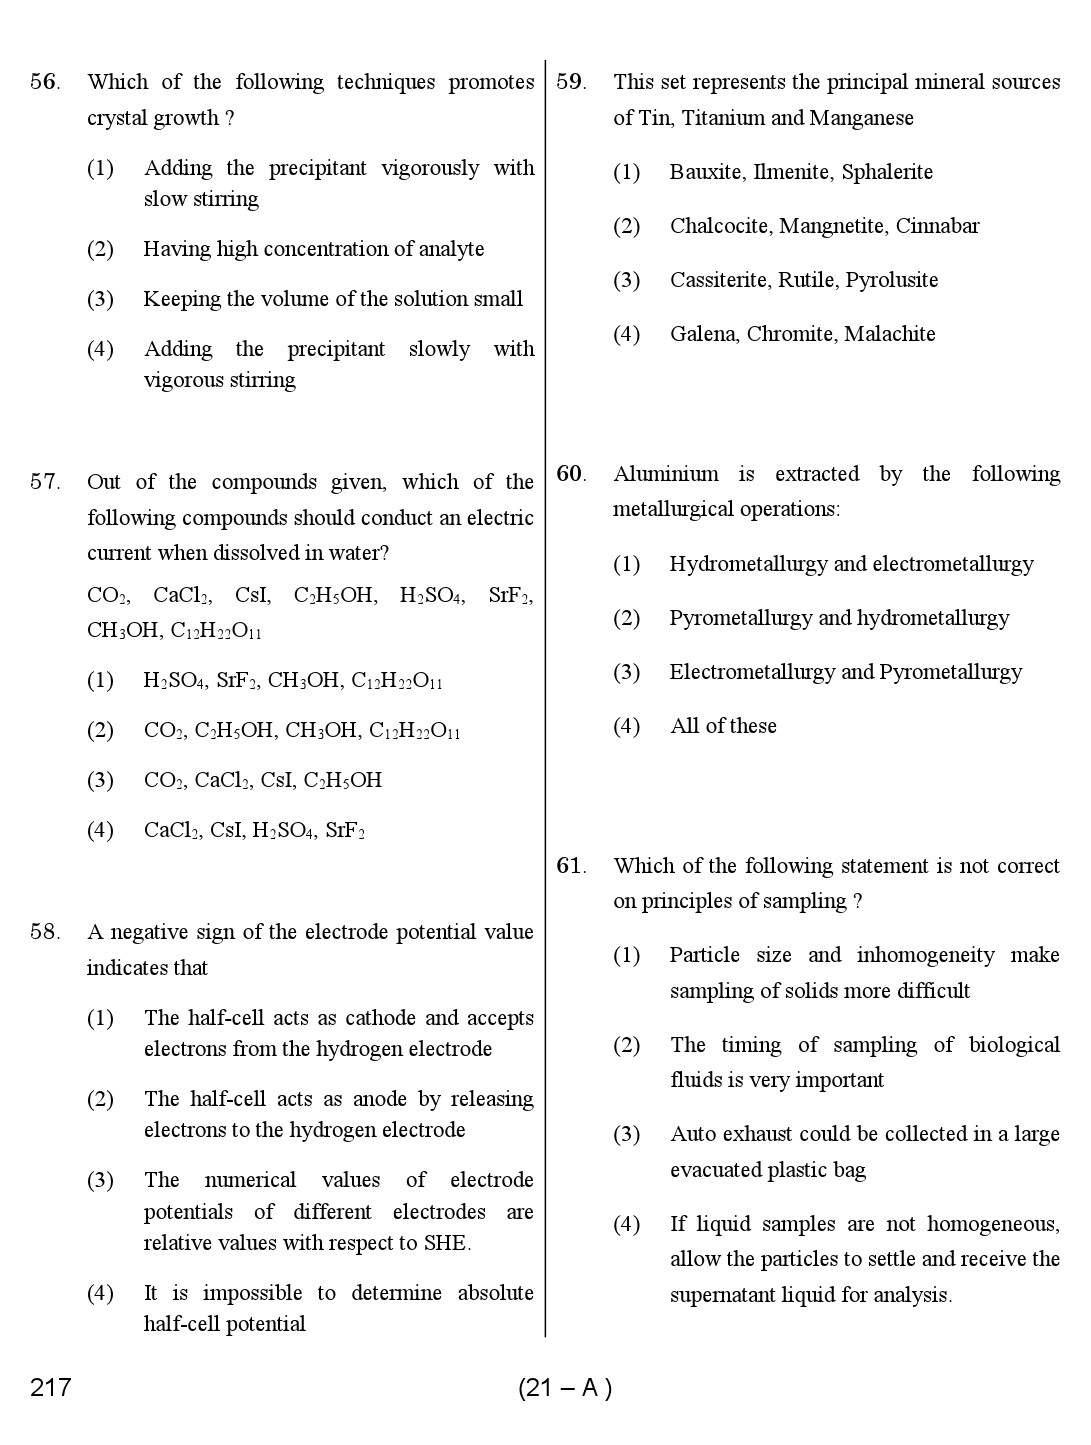 Karnataka PSC Chemist Exam Sample Question Paper 21